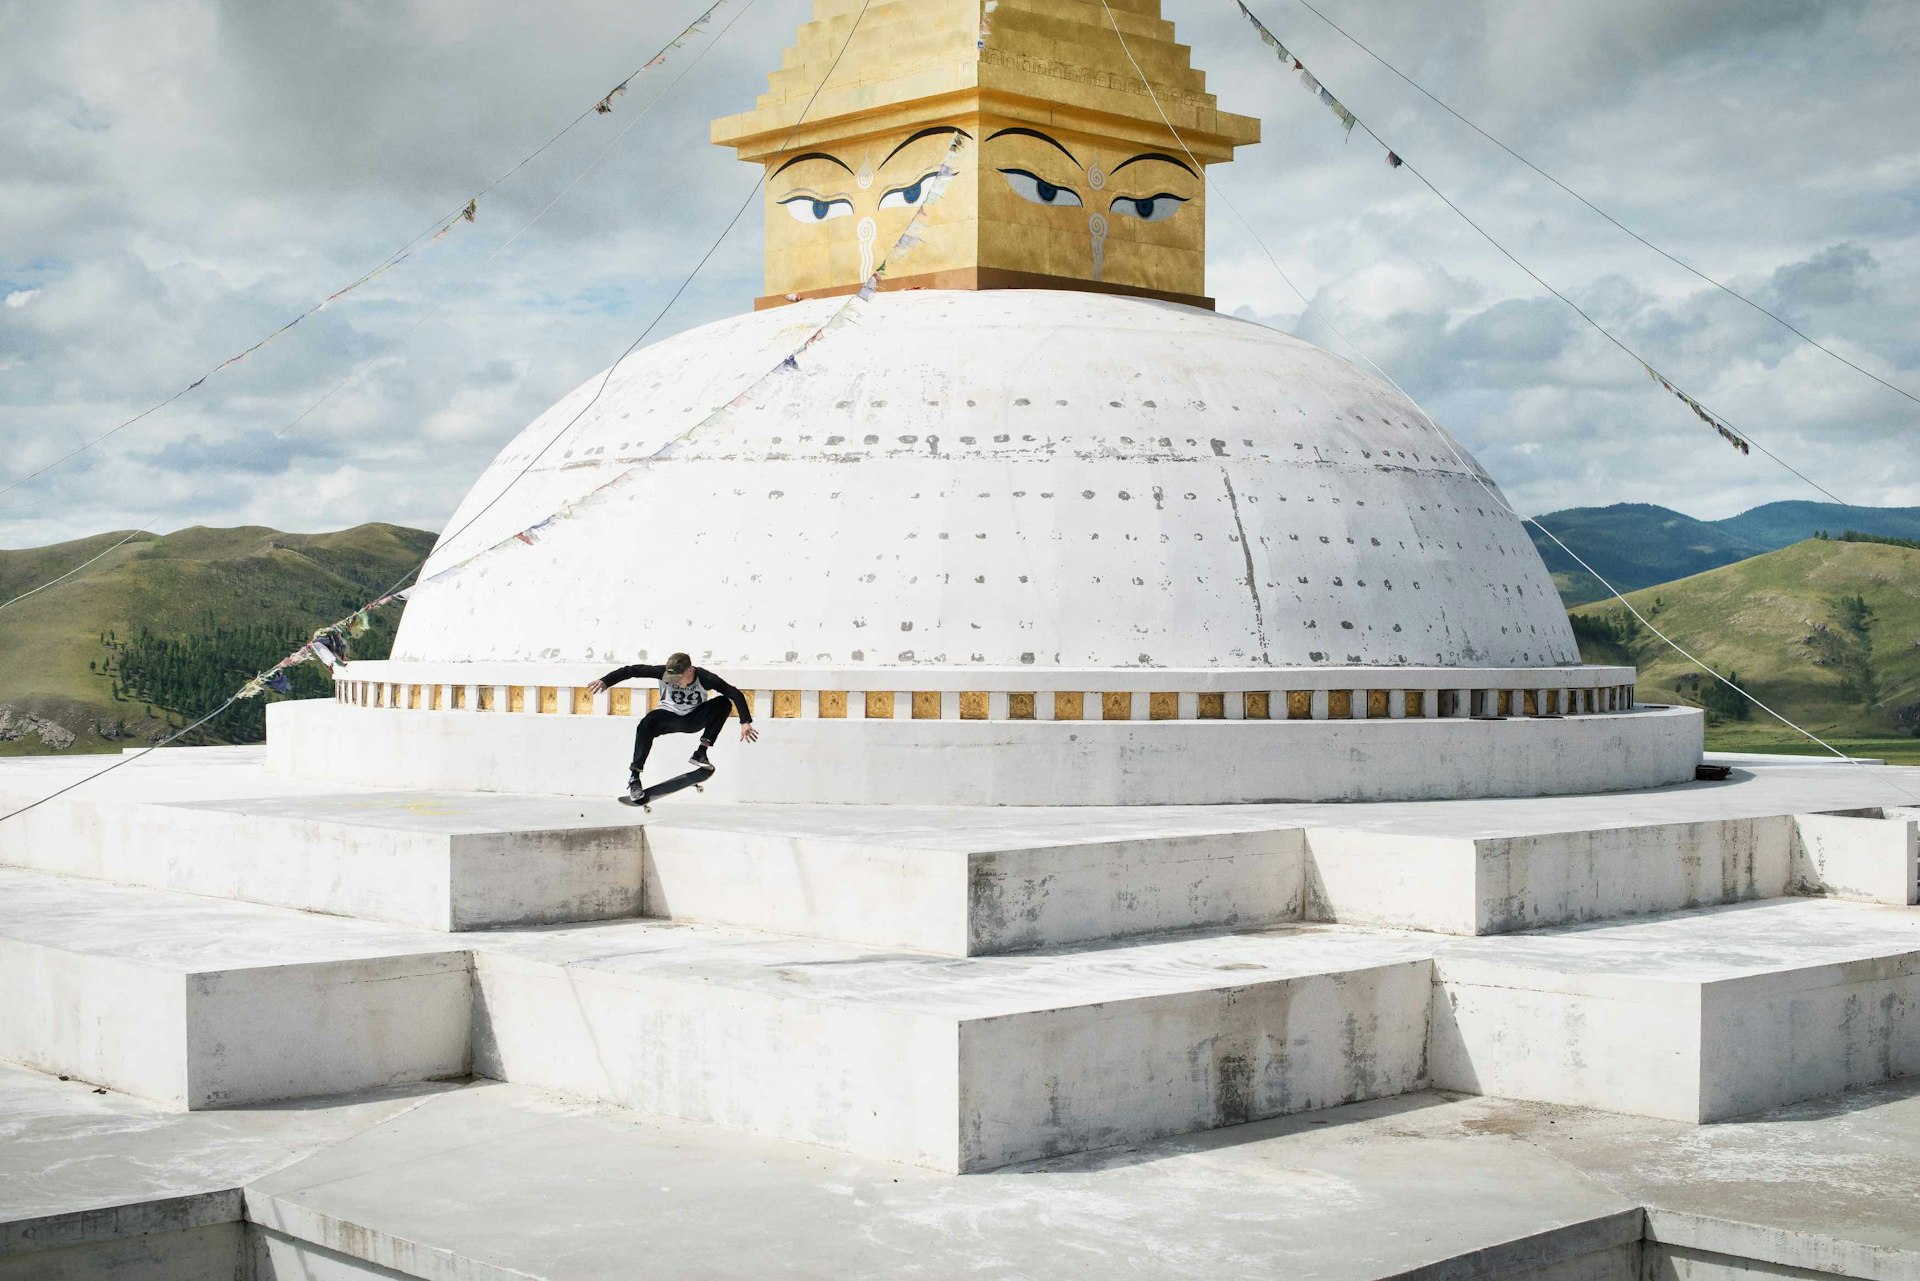 In Pictures: The evolution of Mongolia’s fledgling skateboarding scene